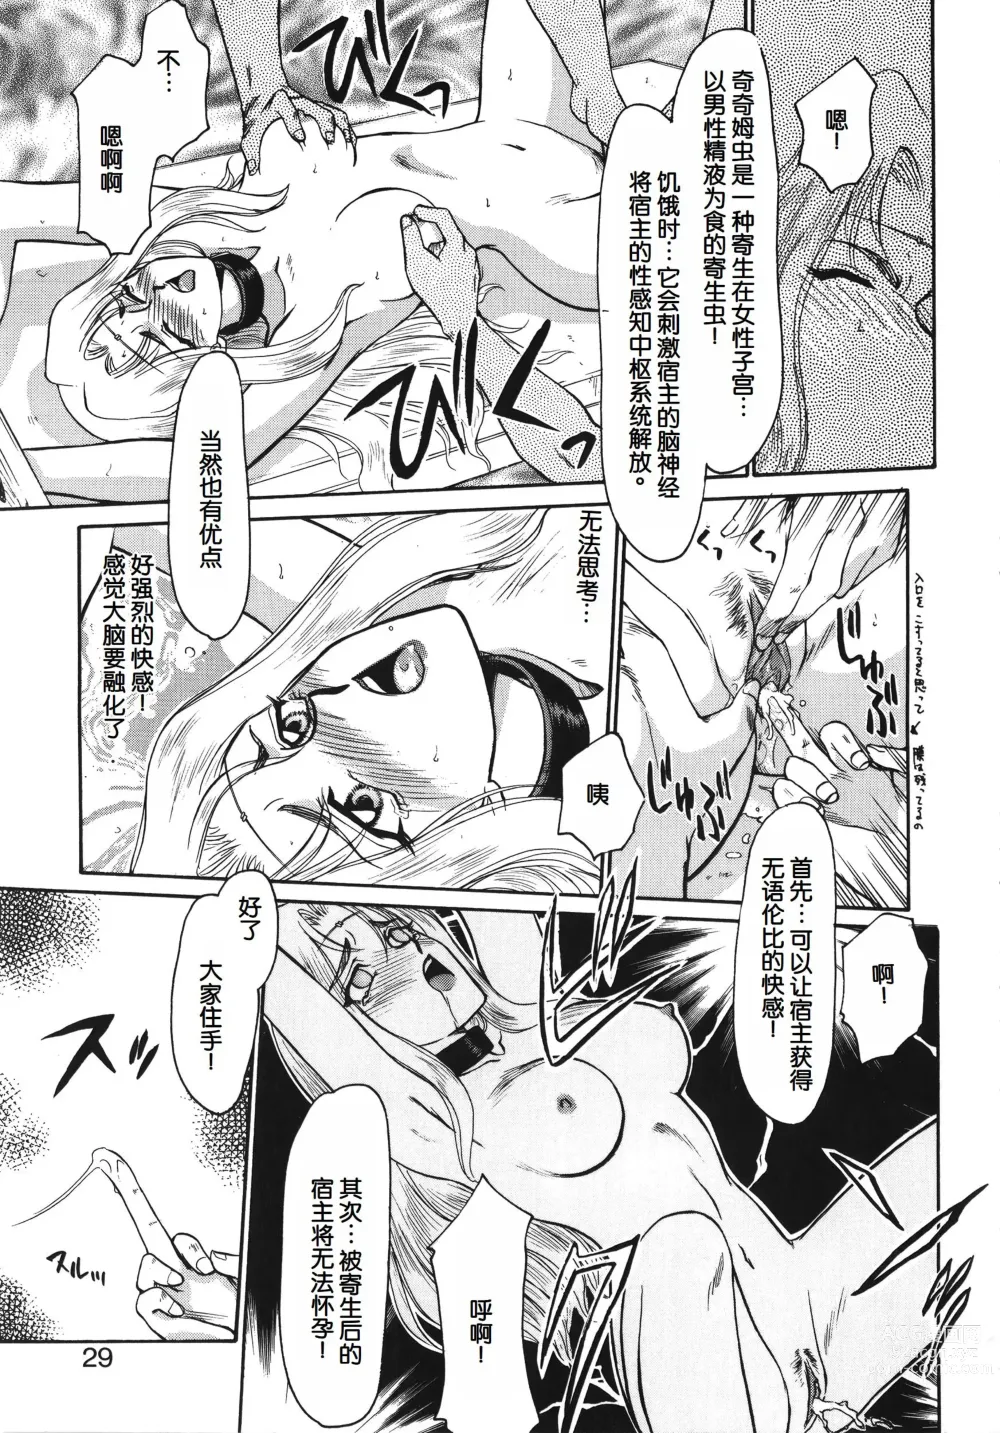 Page 29 of manga Bad Moon...